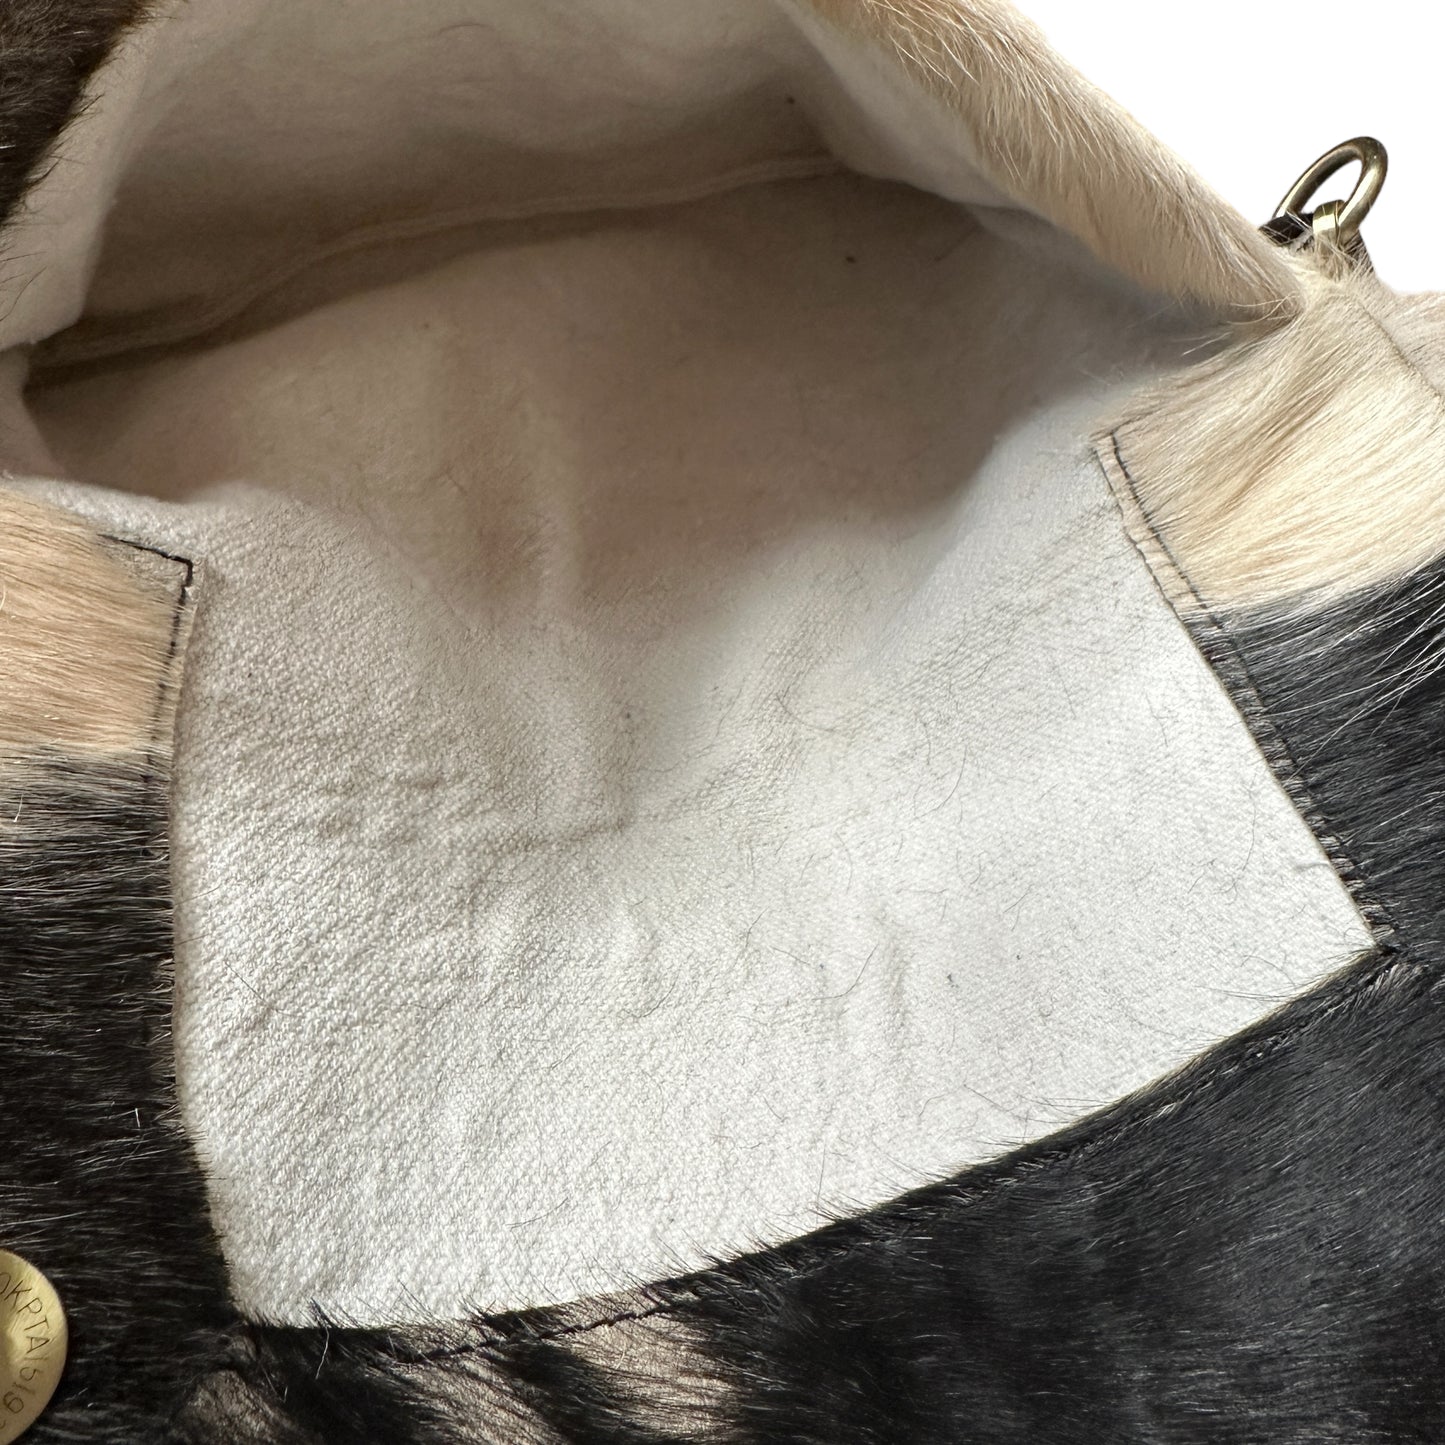 Fur Crossbody Bag